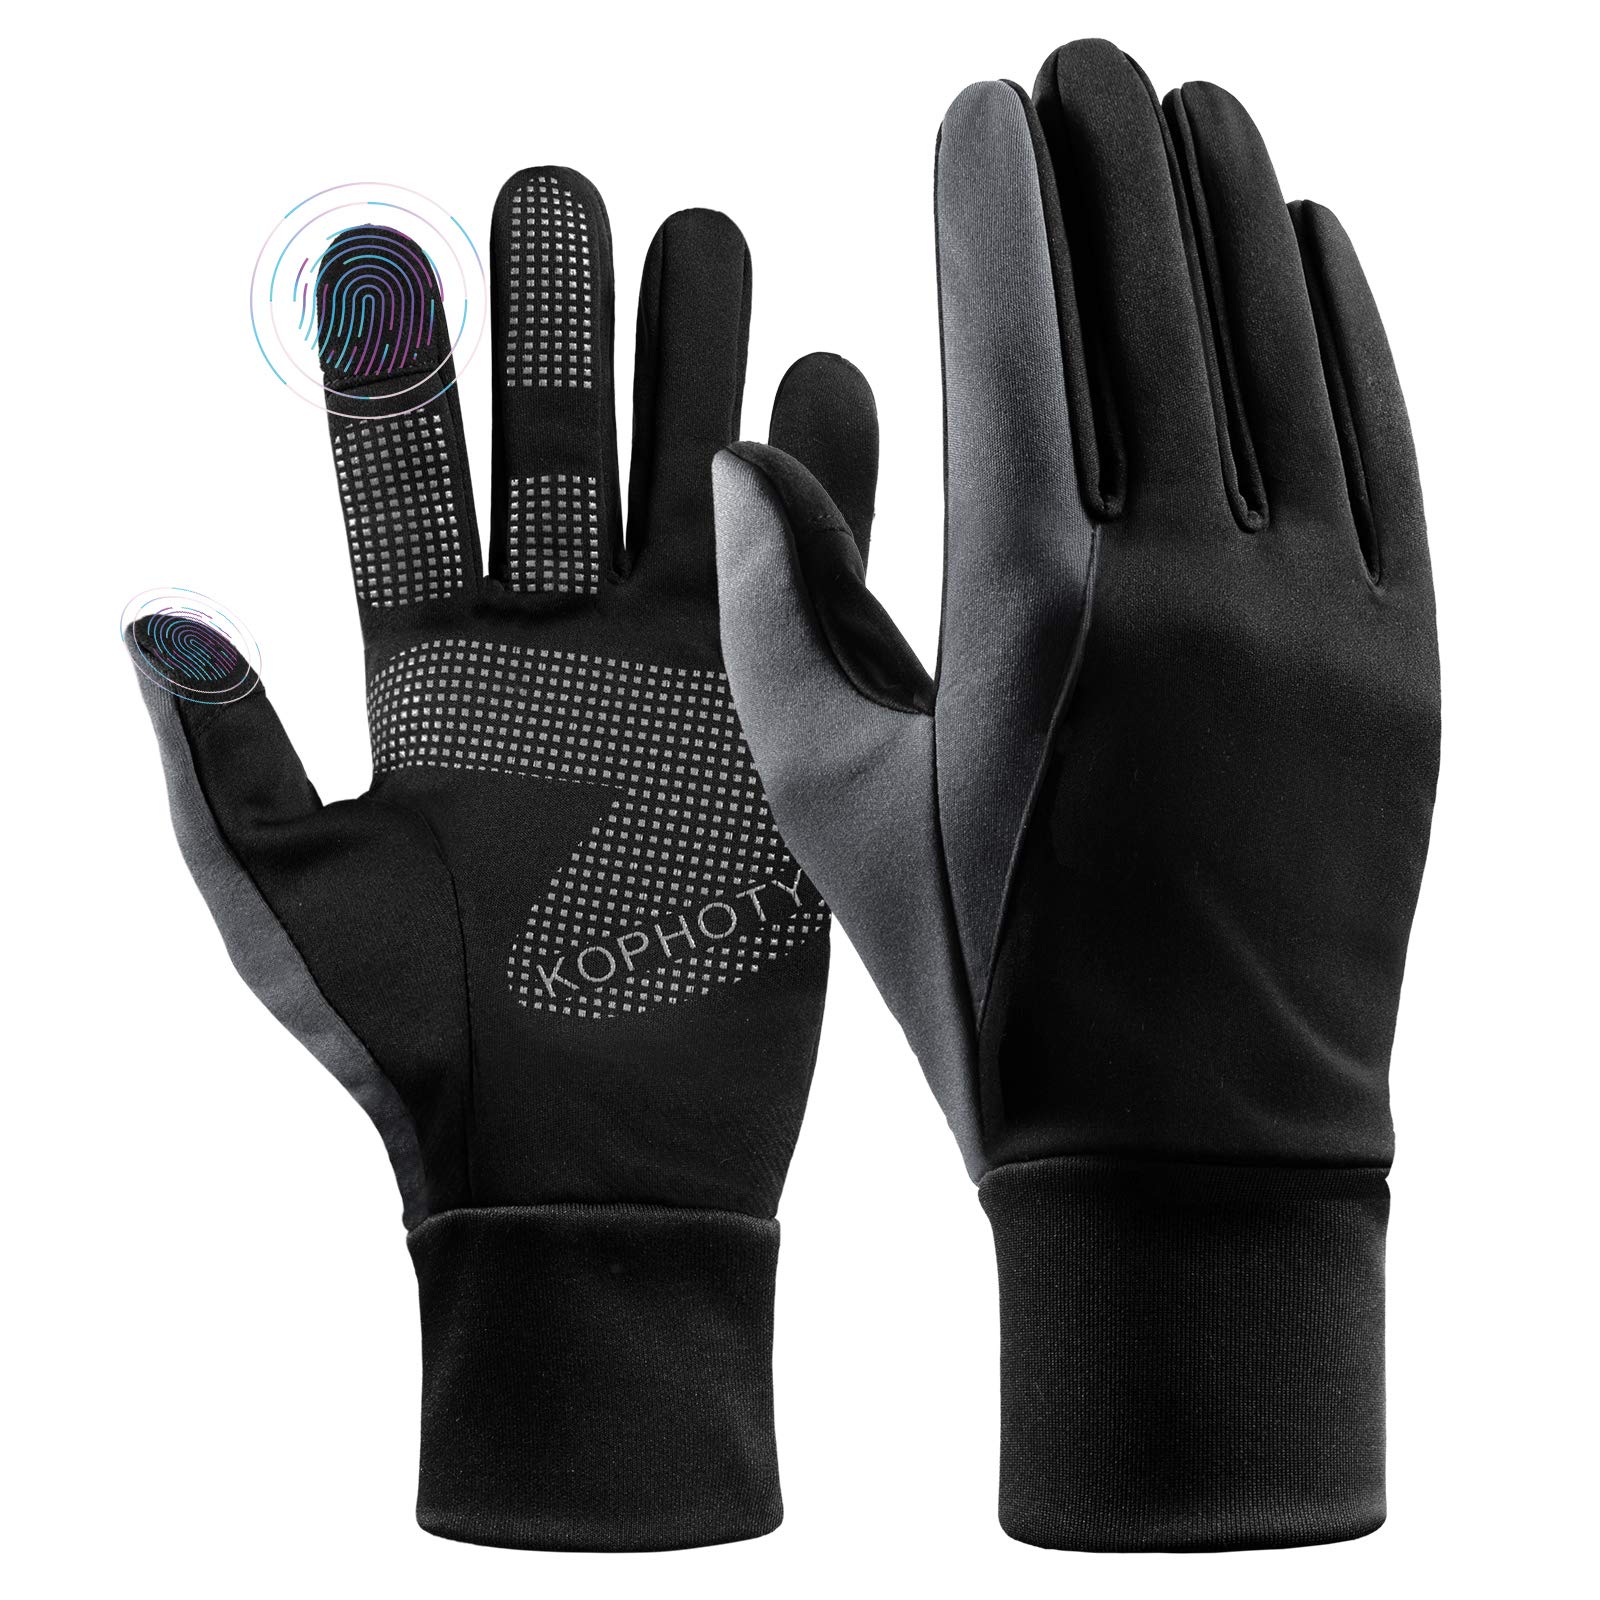  Koxly Winter Gloves Men Women Touch Screen Glove Warm